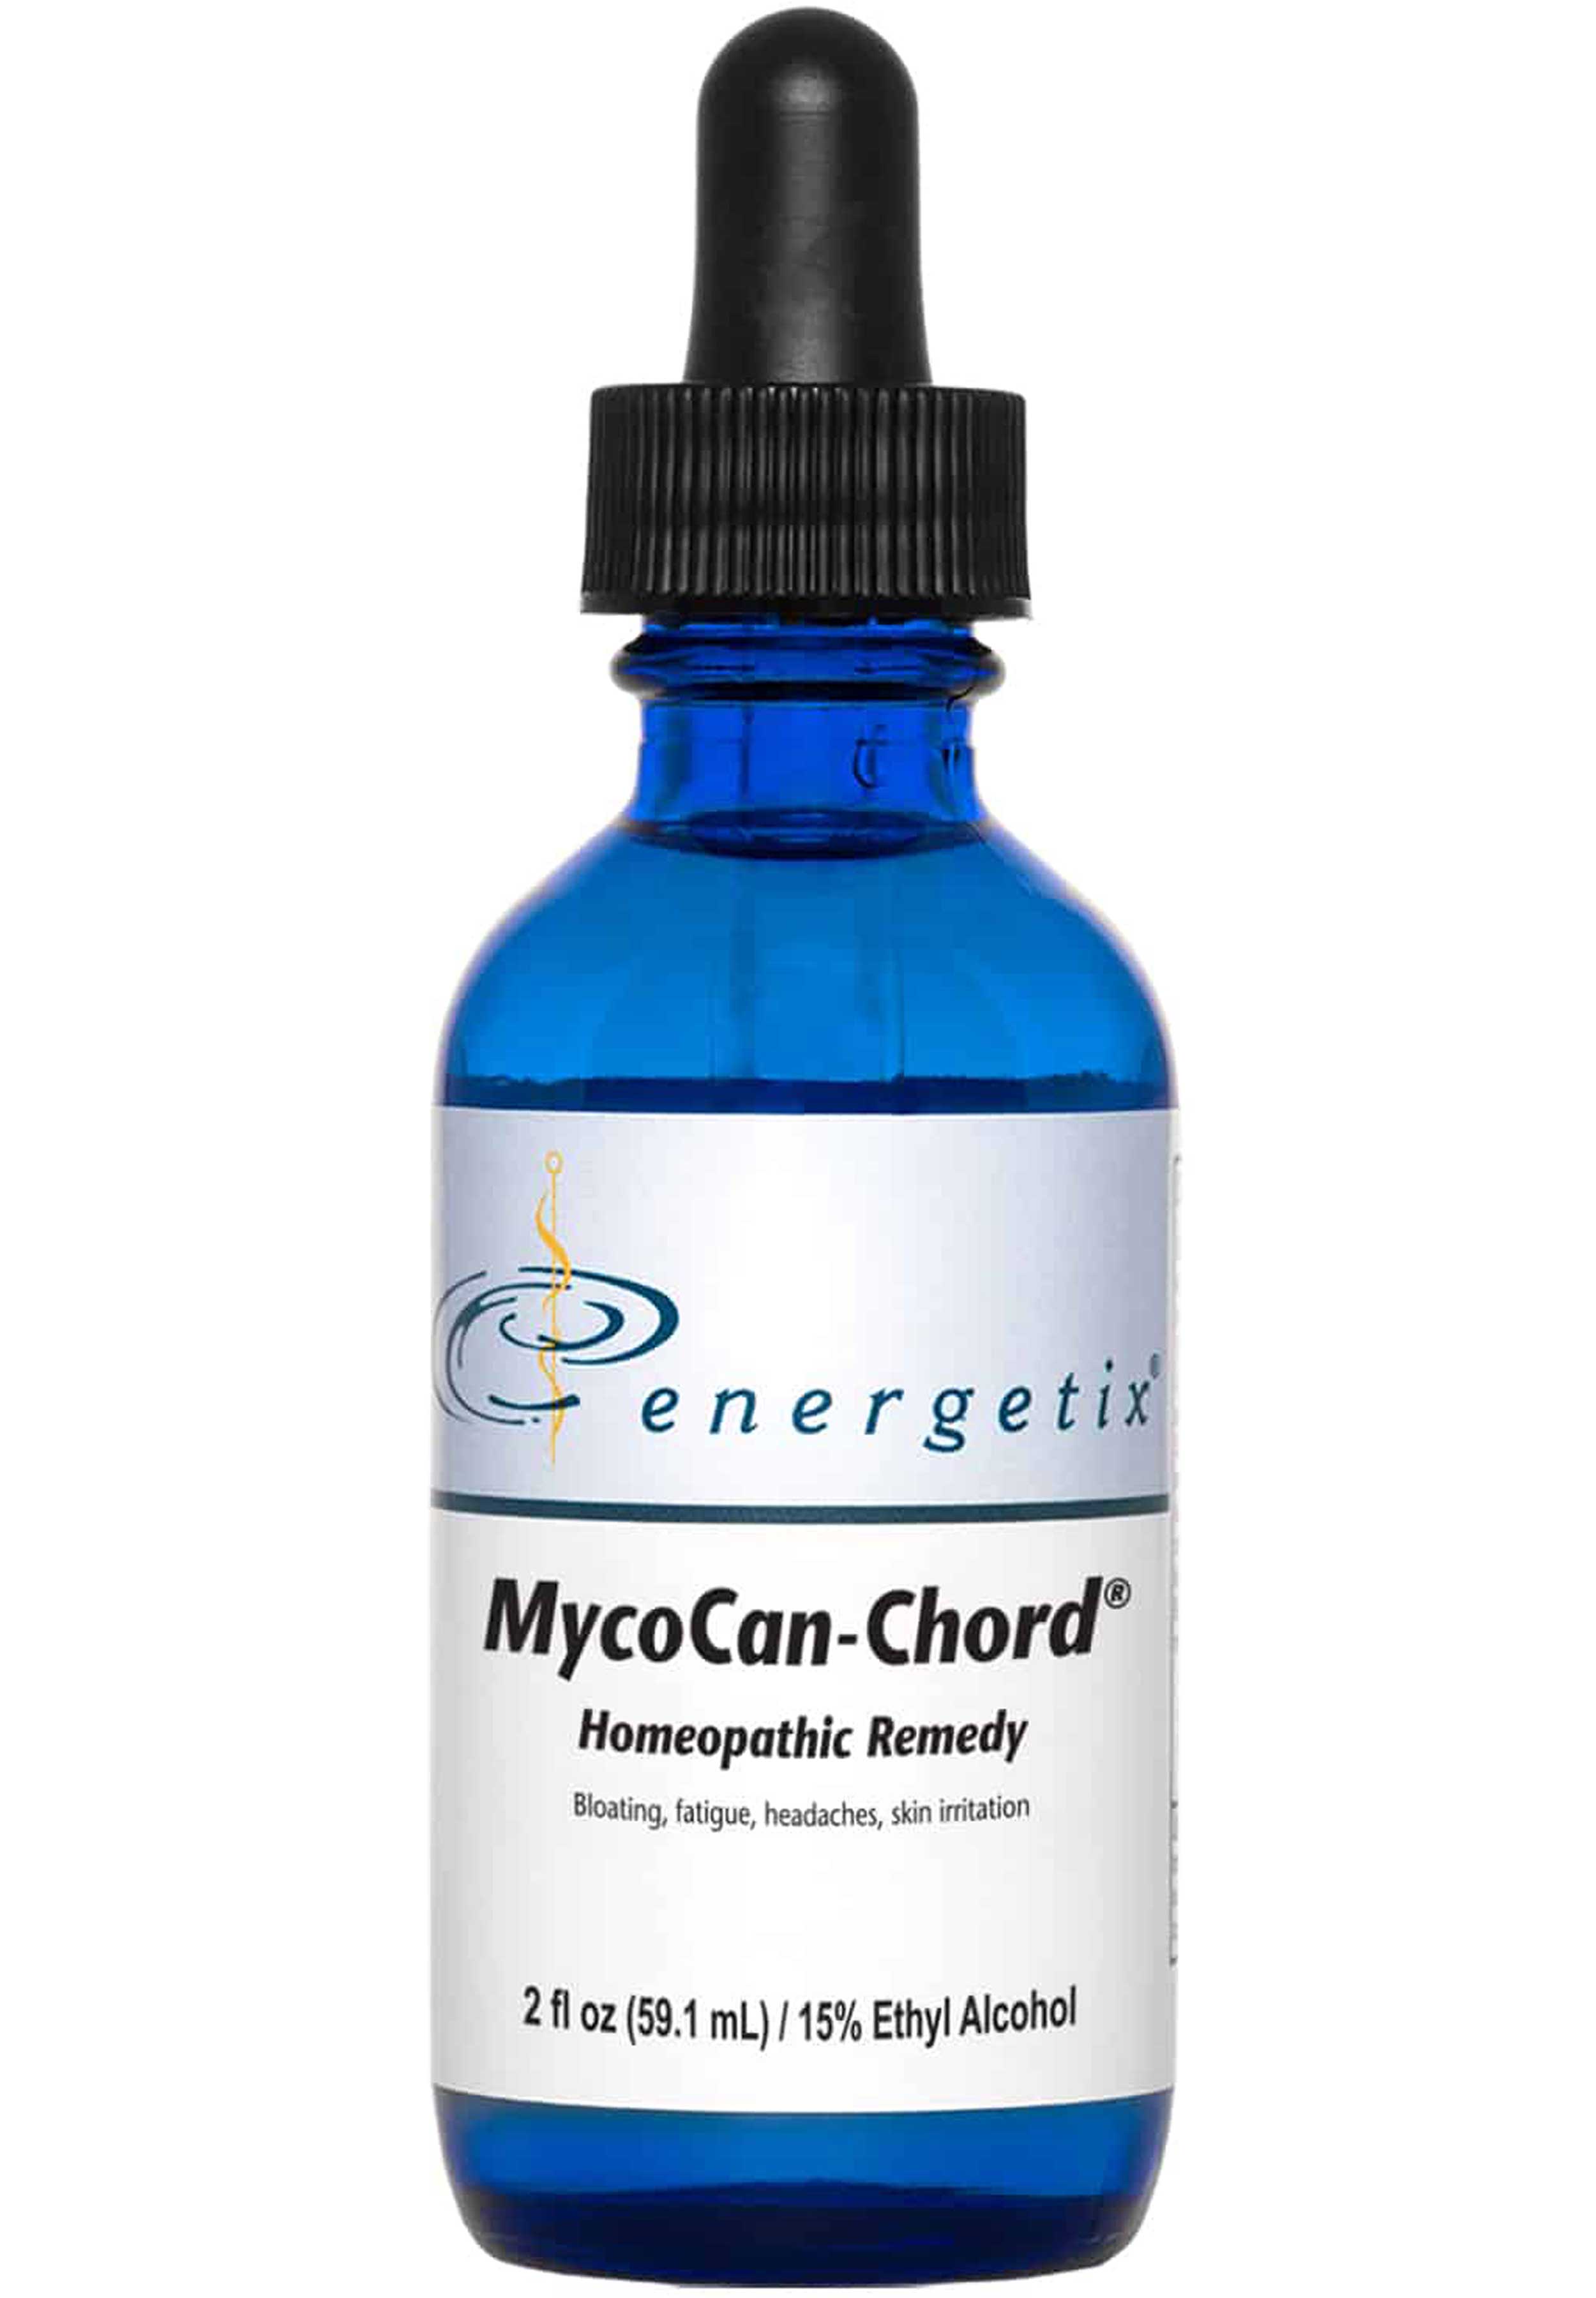 Energetix MycoCan-Chord